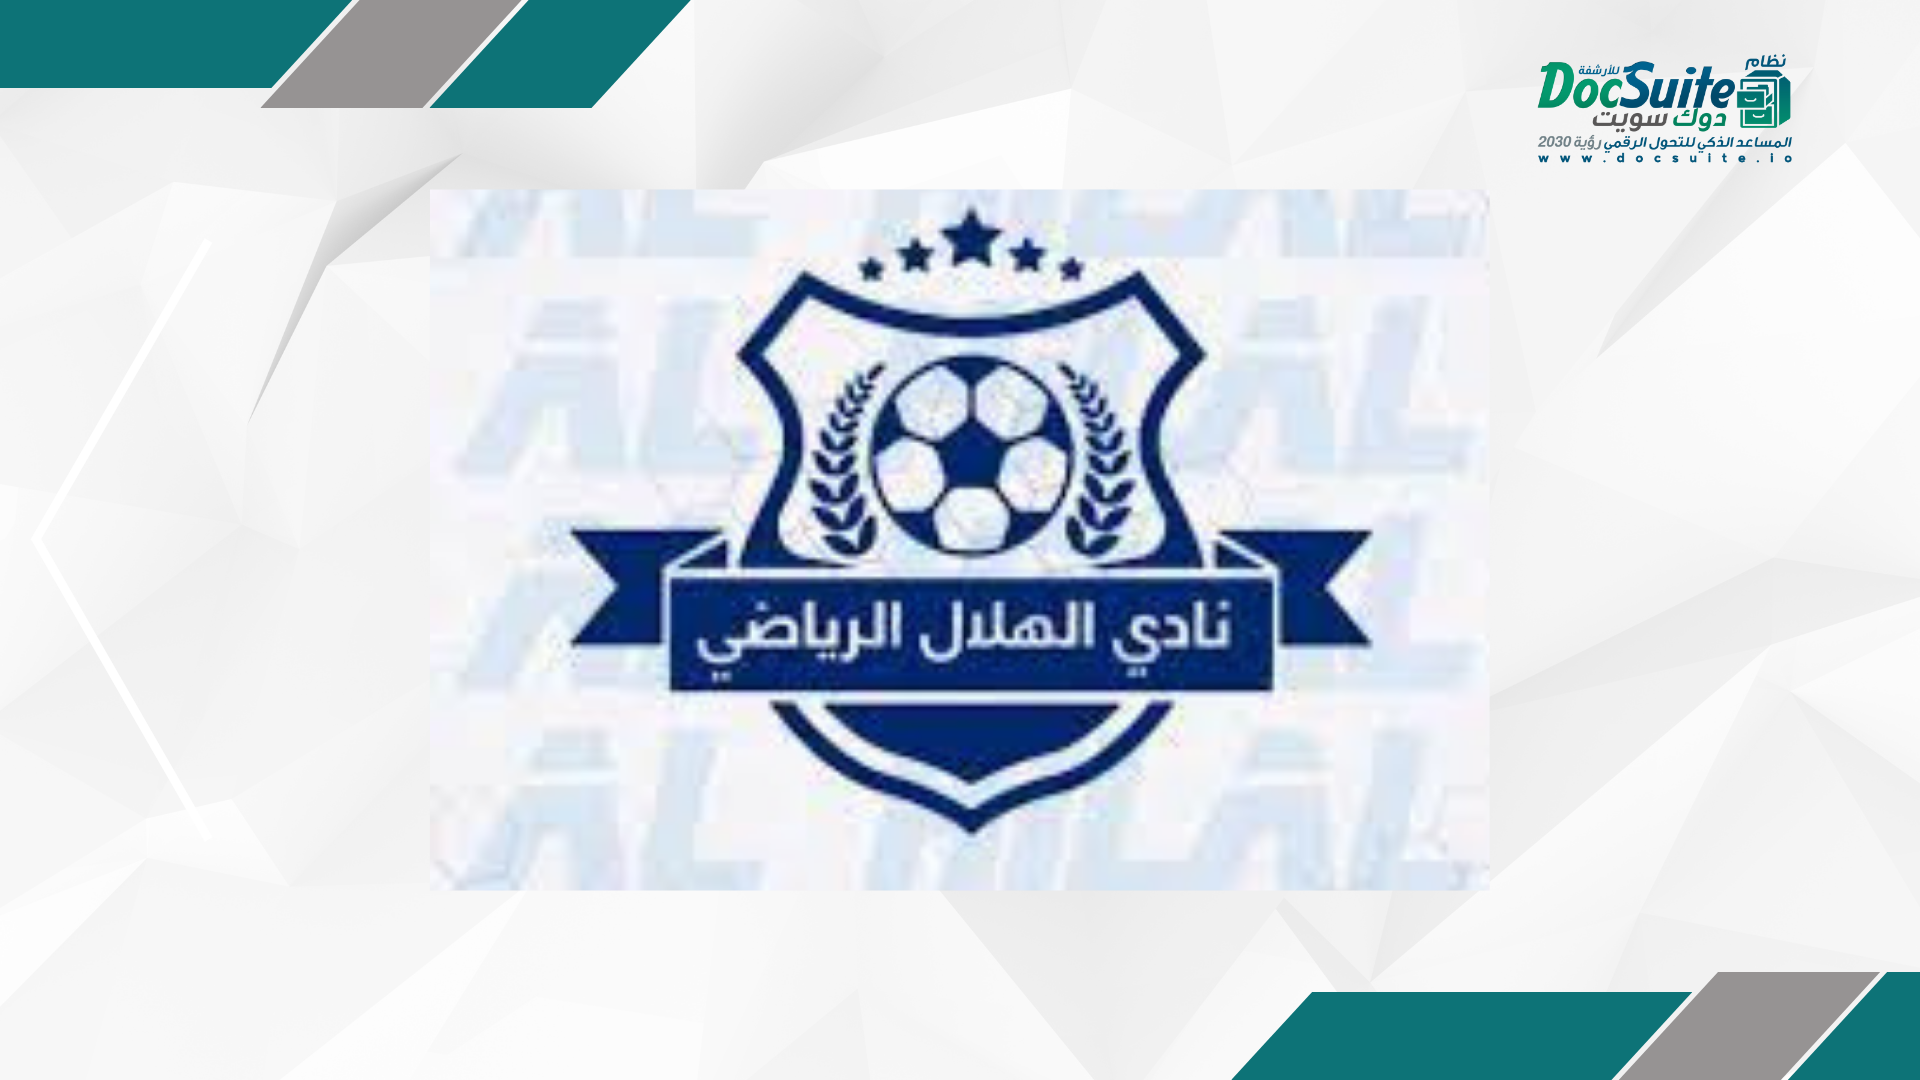 Al Hilal Club application for sports governance